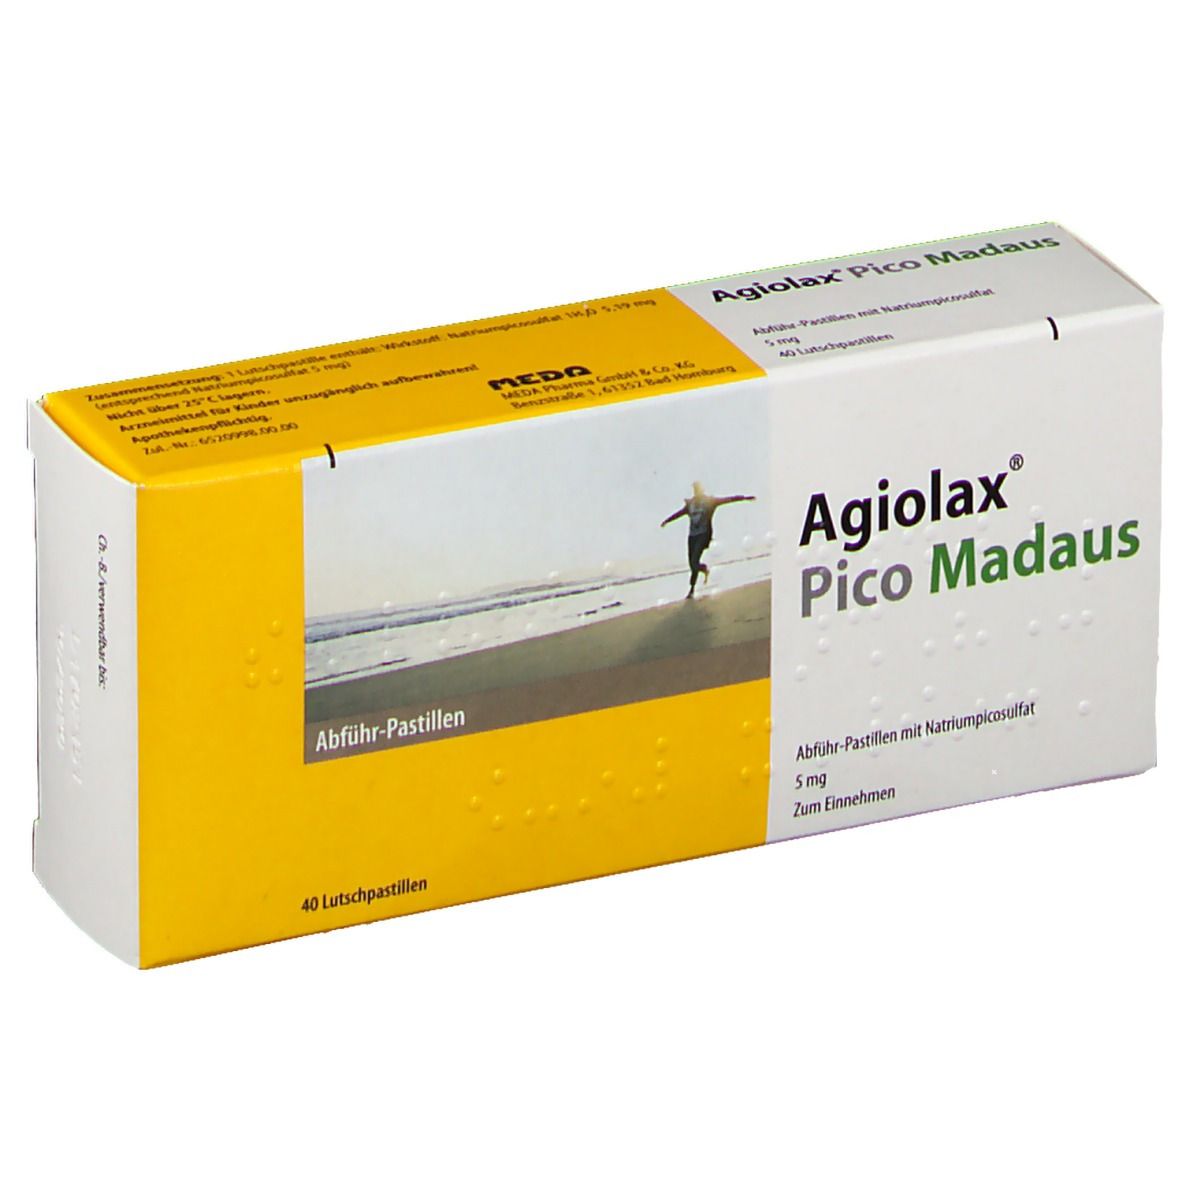 Agiolax® Pico Madaus